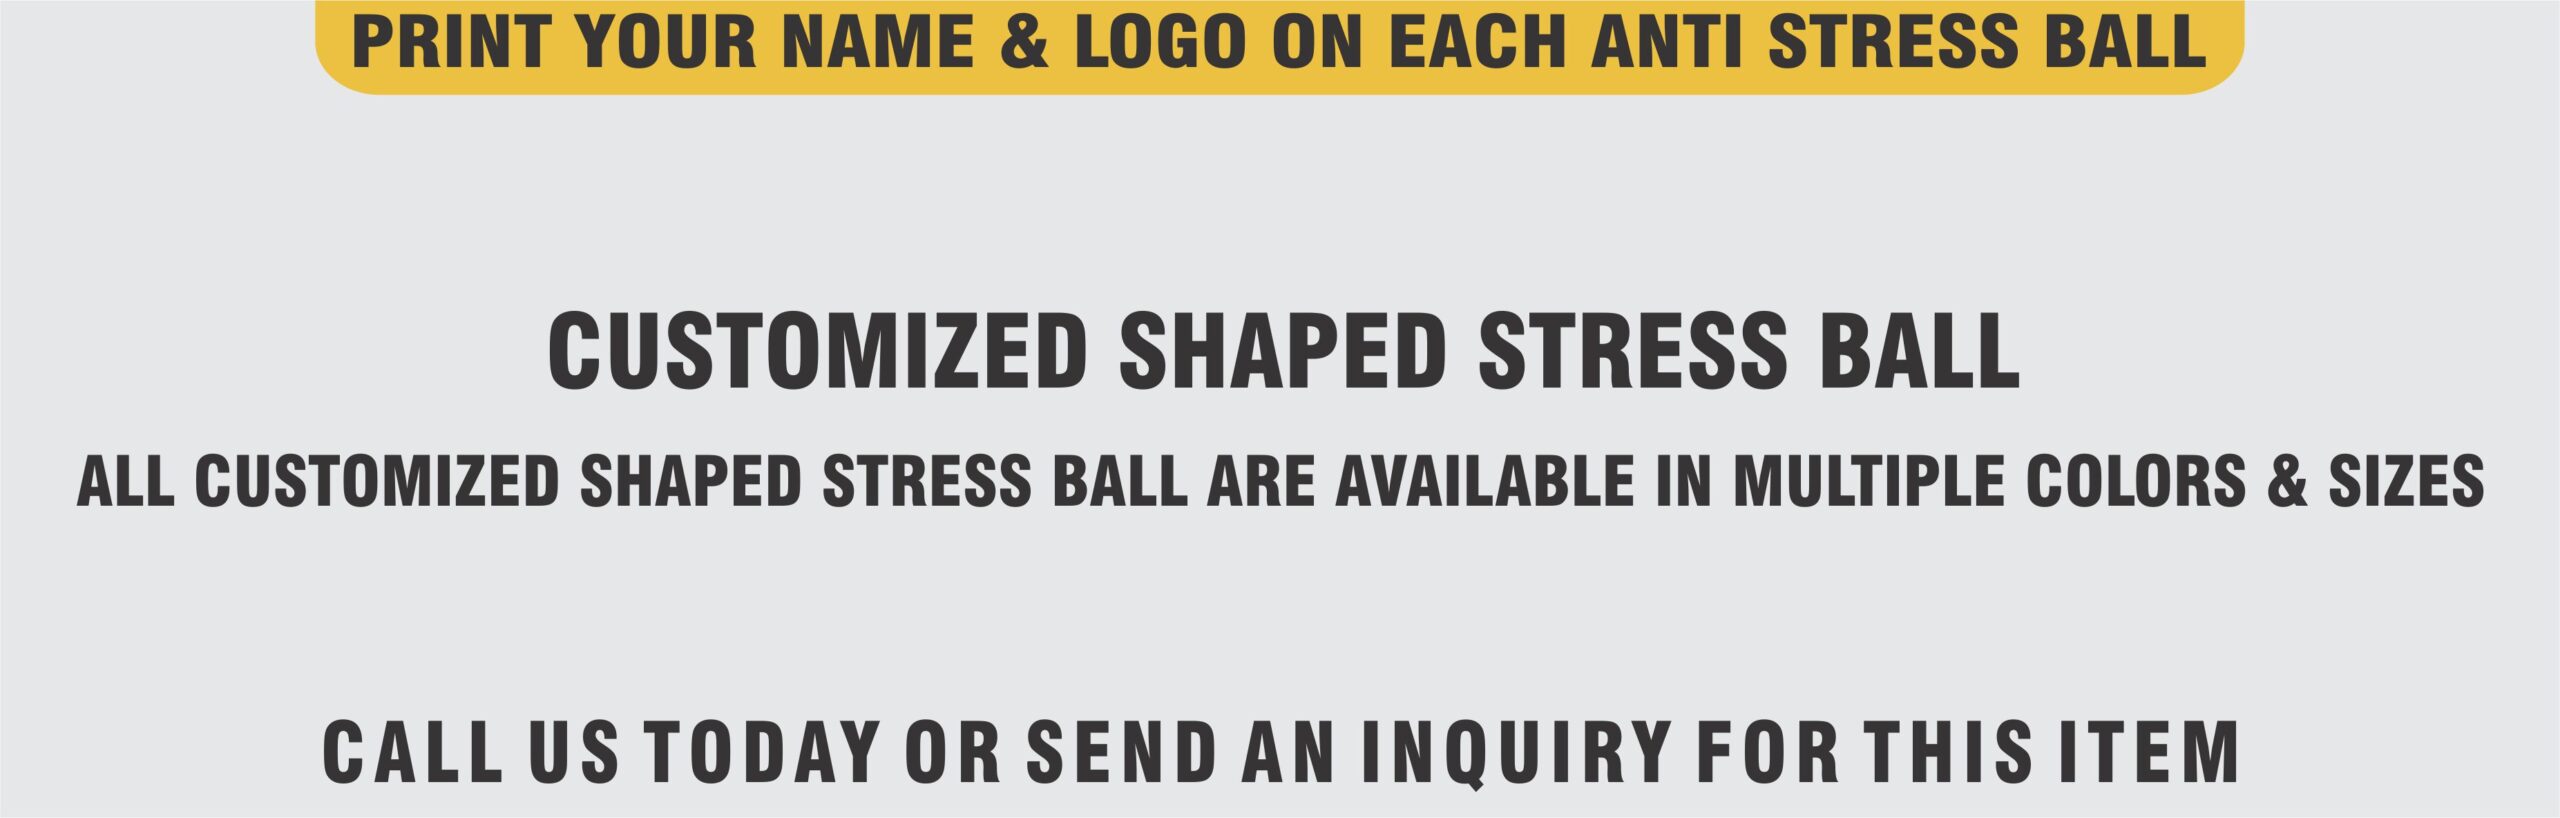 Customized Stress Balls, Anti Stress balls, Anti Stress Balls Supplier in Dubai